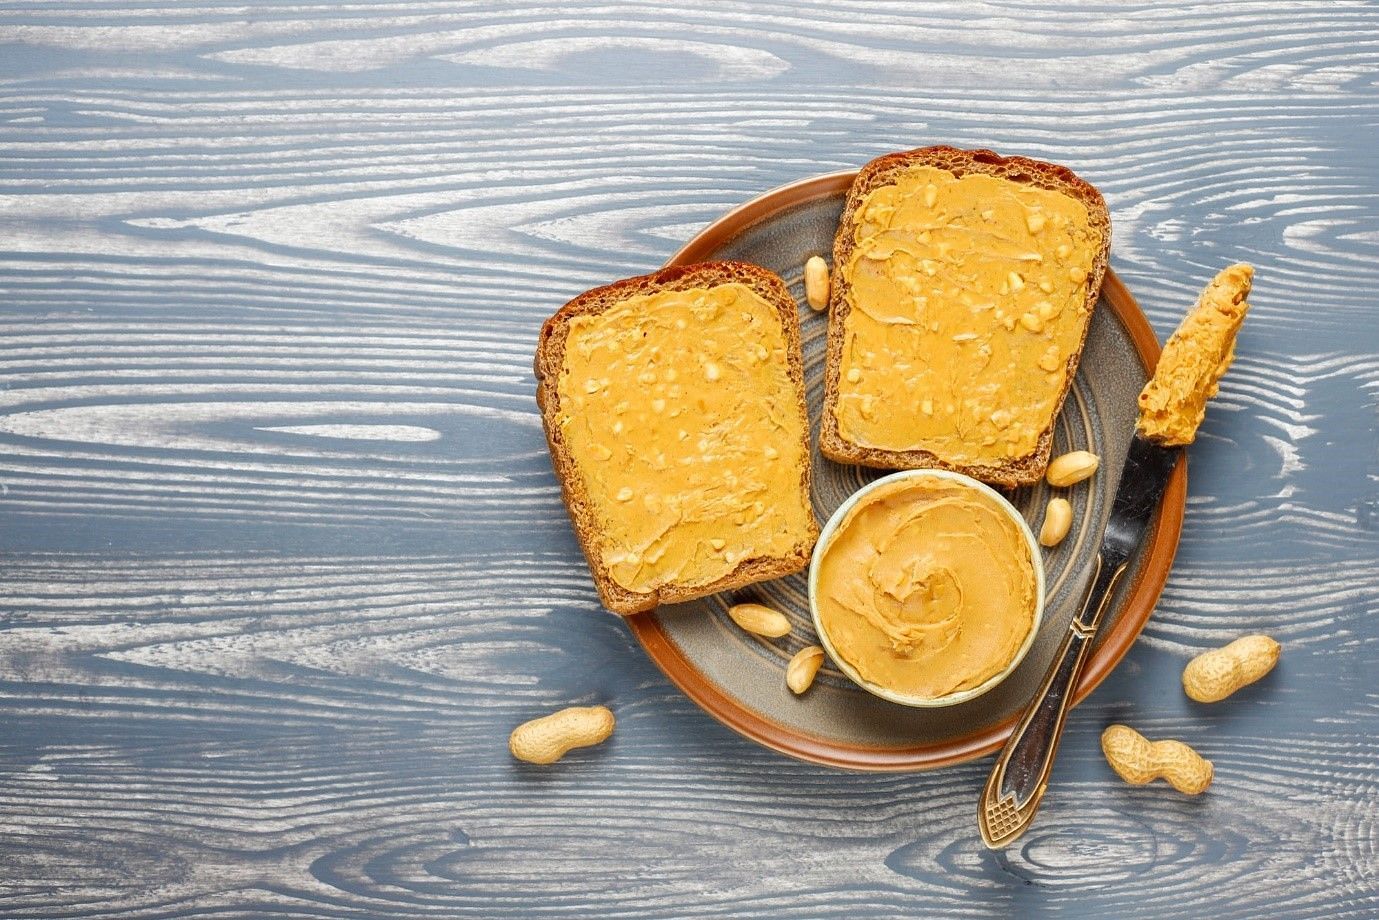 Opt for sugar-free peanut butter to reduce calorie intake (Image by Azerbaijan_stockers on Freepik)